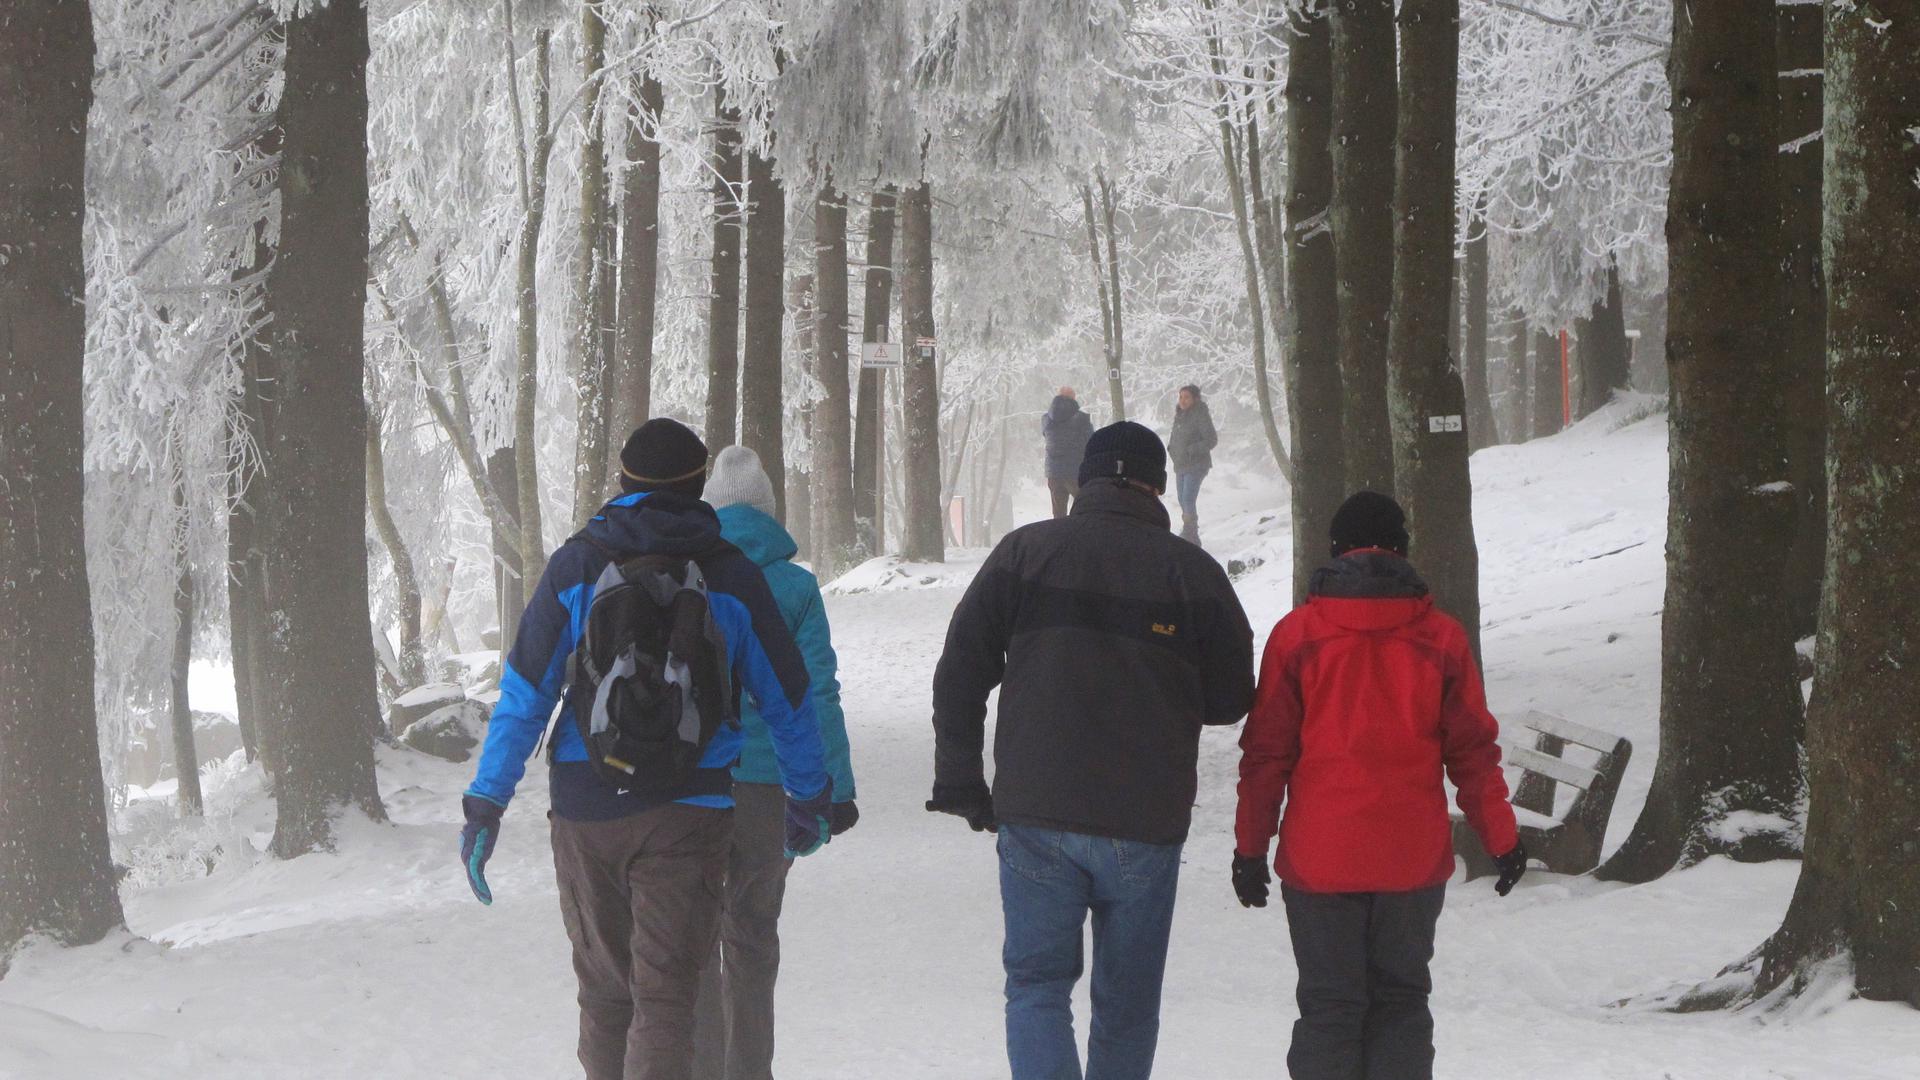 Wanderer 
Mummelsee Rundweg
Spaziergänger
Ausflug
Winter
Winterwanderung
